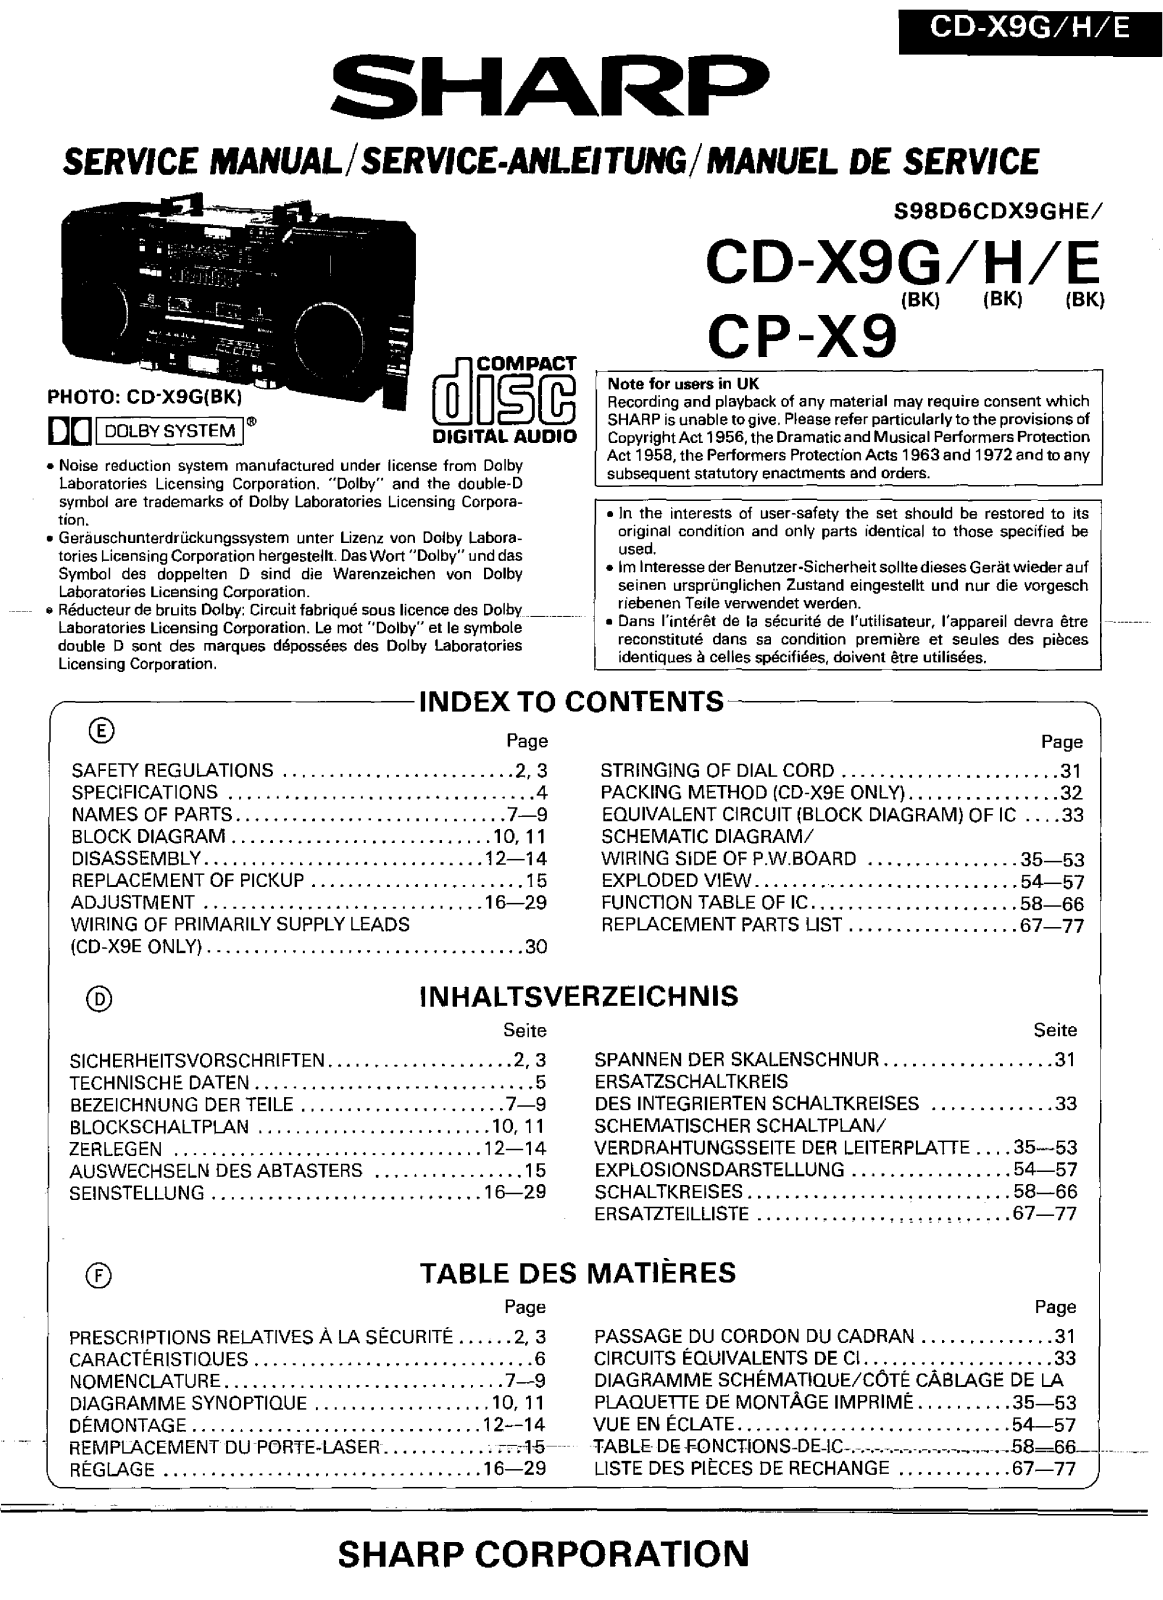 Sharp CDX-9 Service manual